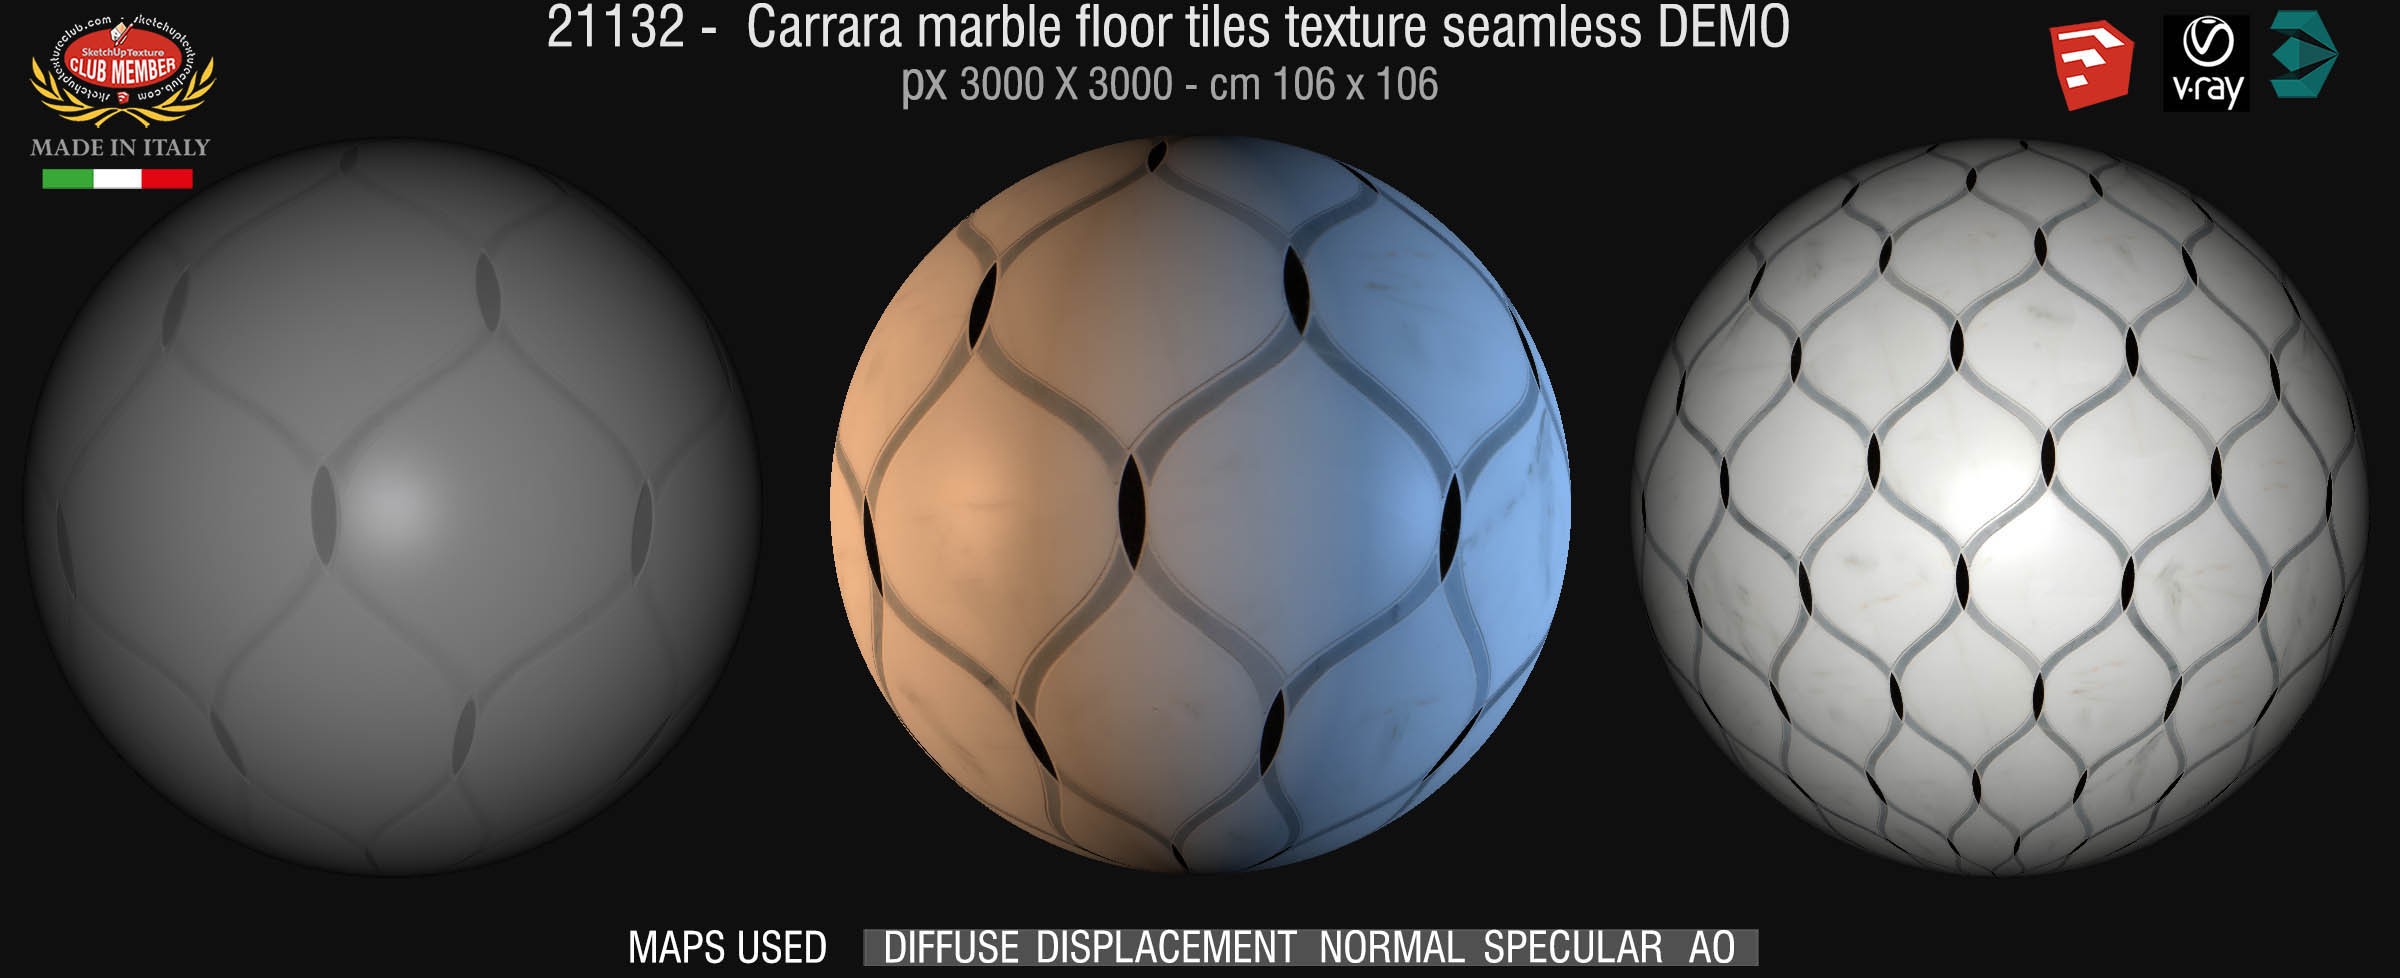 21132 Carrara marble floor tile texture seamless + maps DEMO